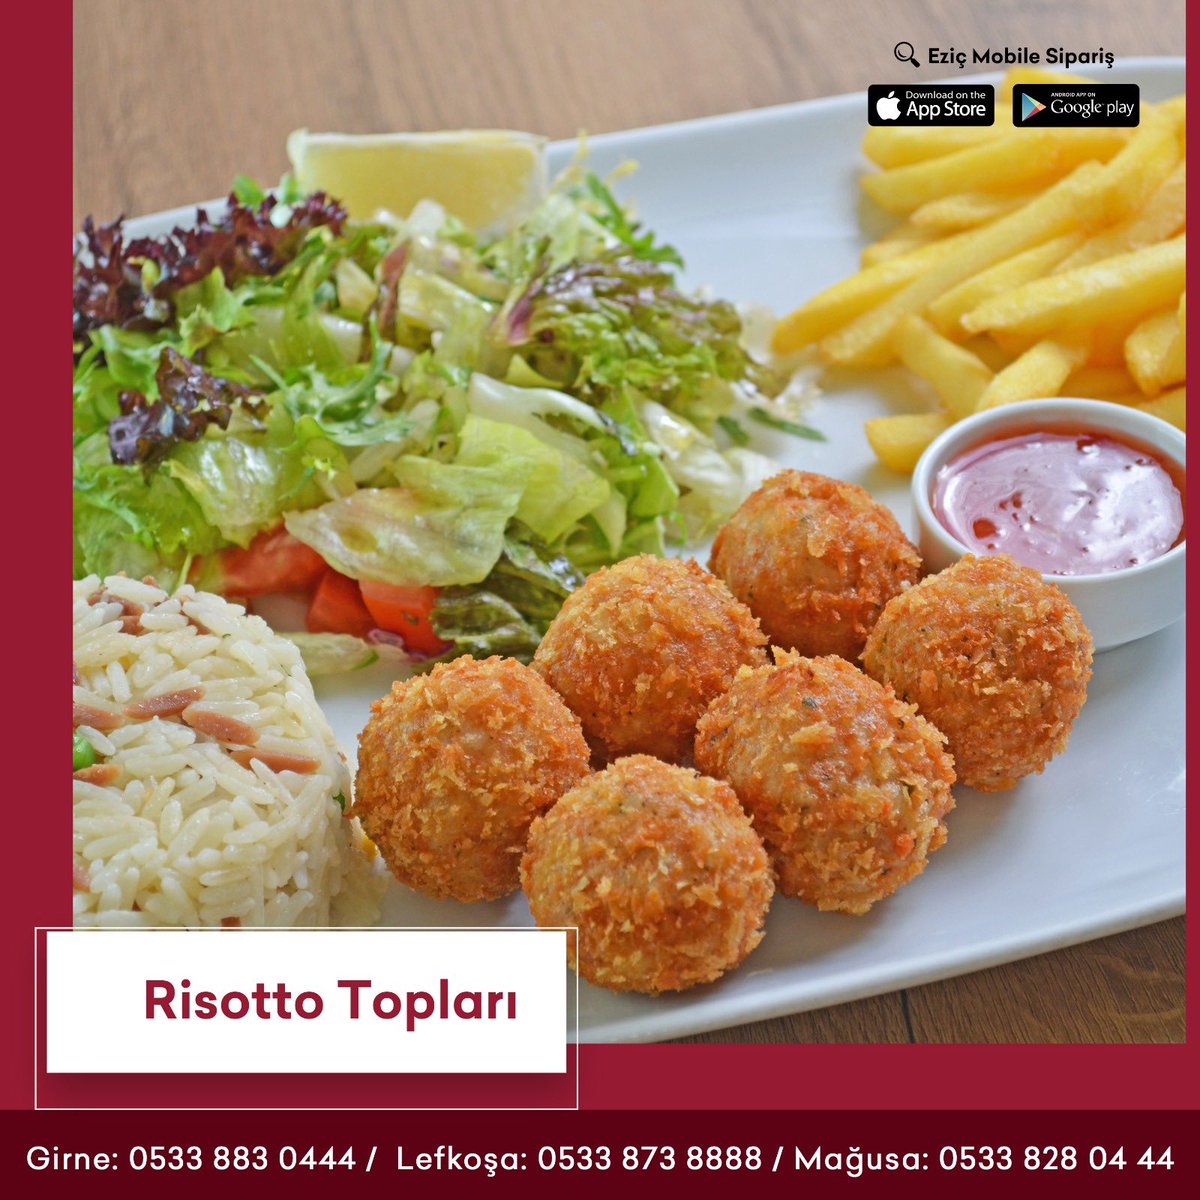 Pirinç ve özel baharatlarla harmanlanmış tavuk topları 😍 #risottoballs #risotto #eziç #food #foodlover #cyprus